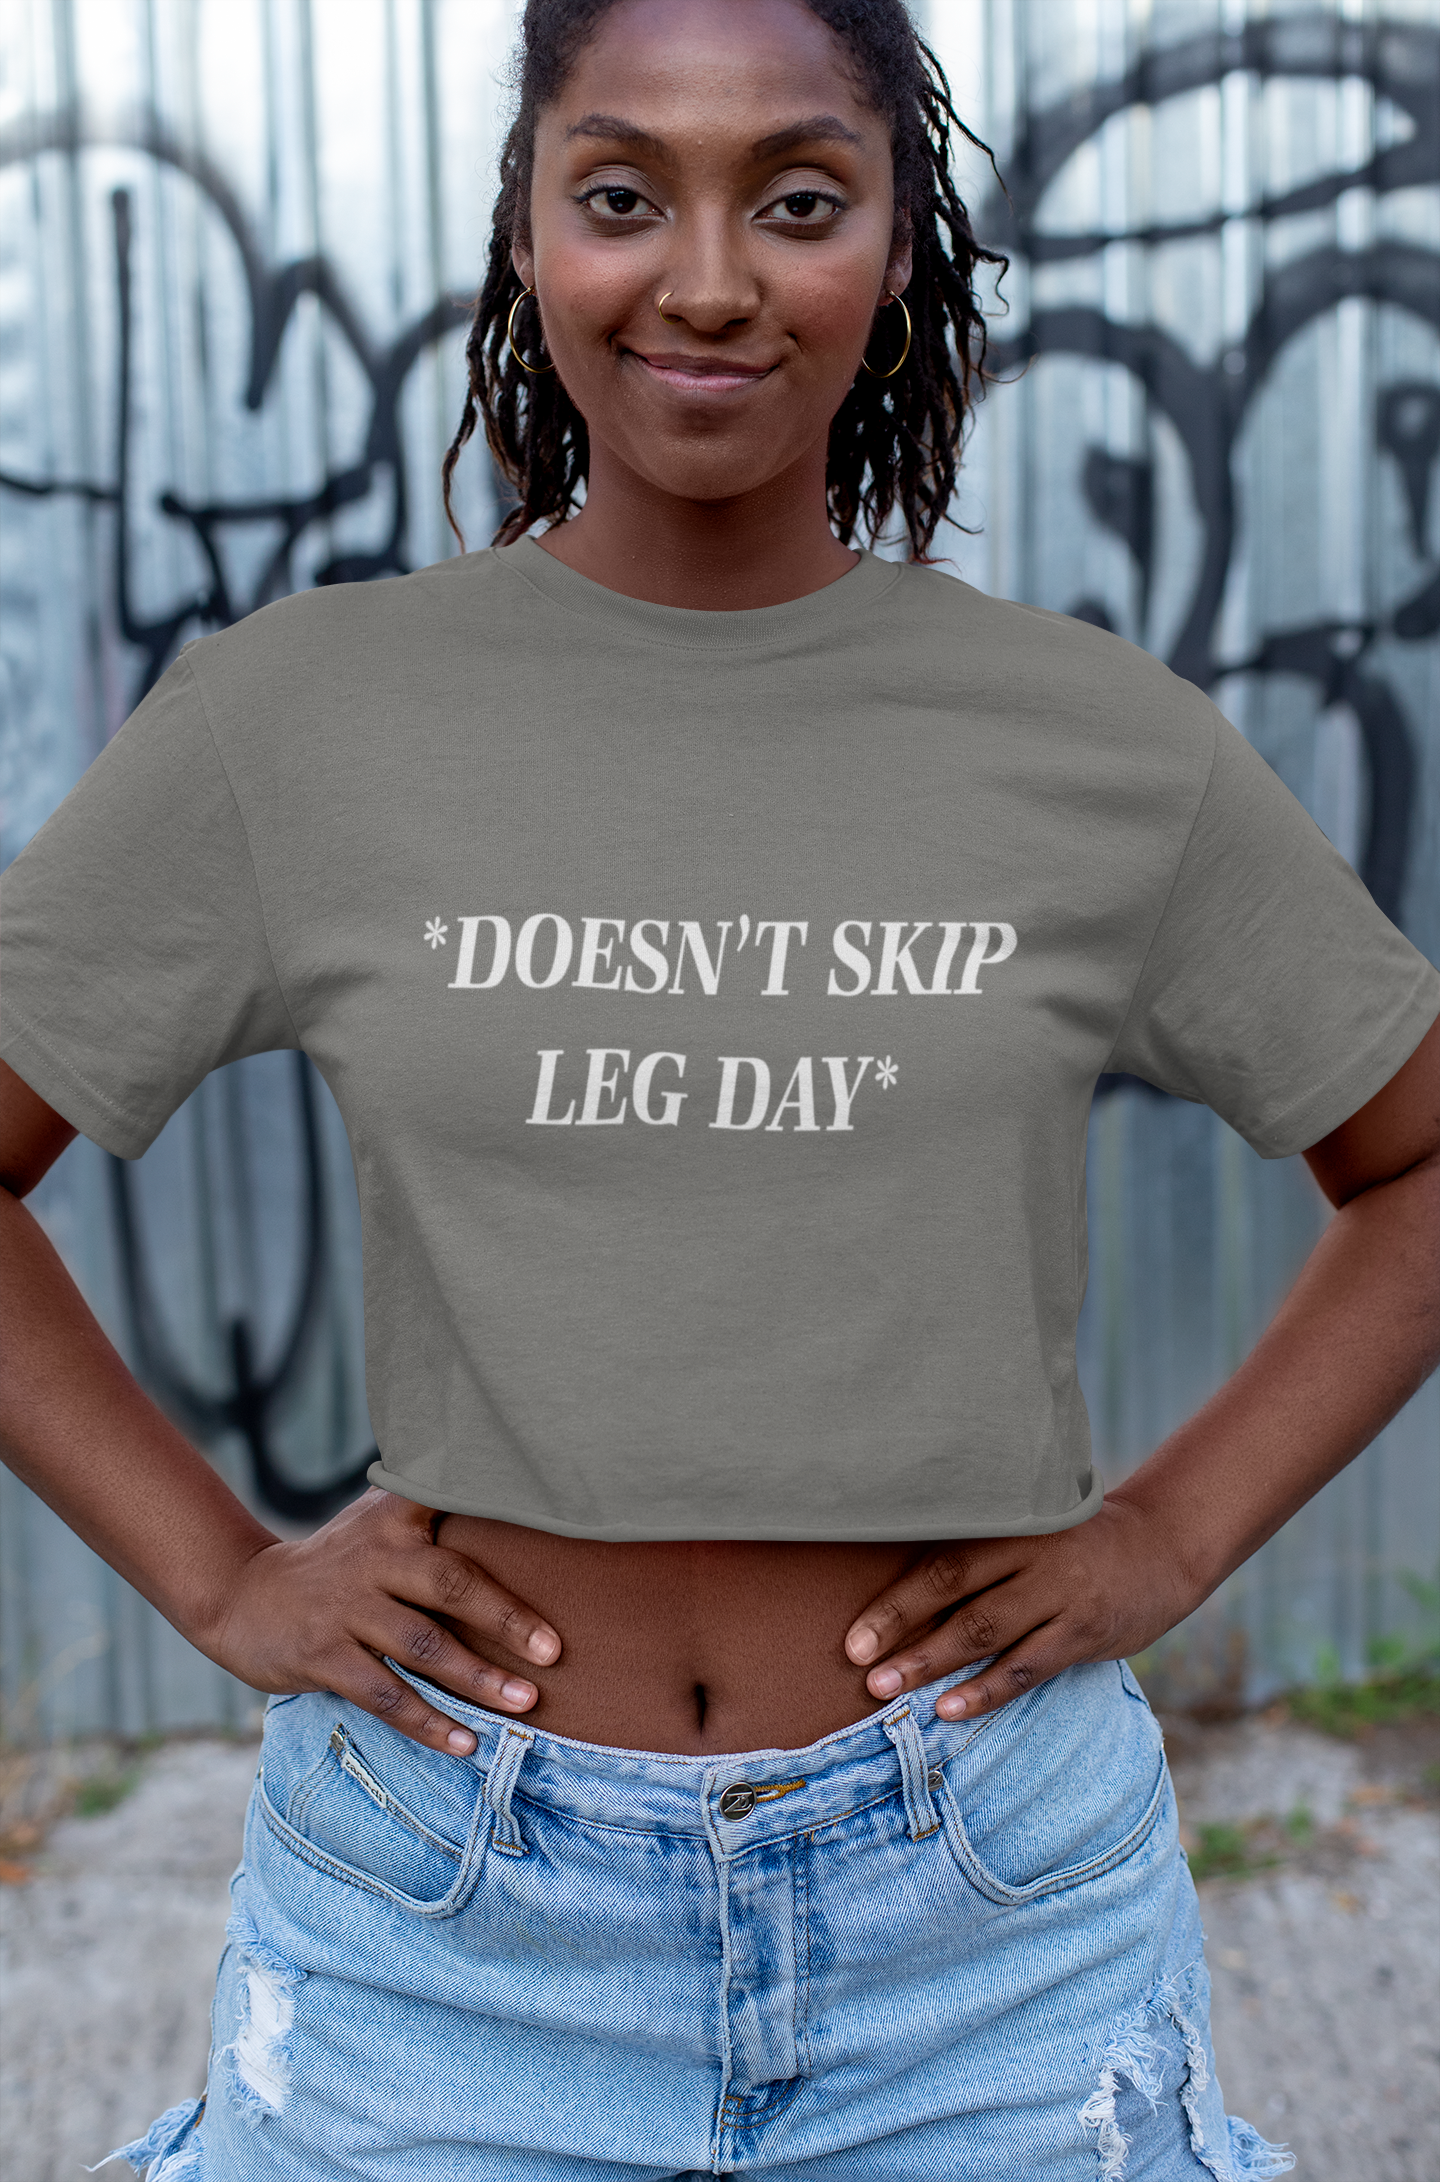 DOESN'T SKIP LEG DAY Crop Top